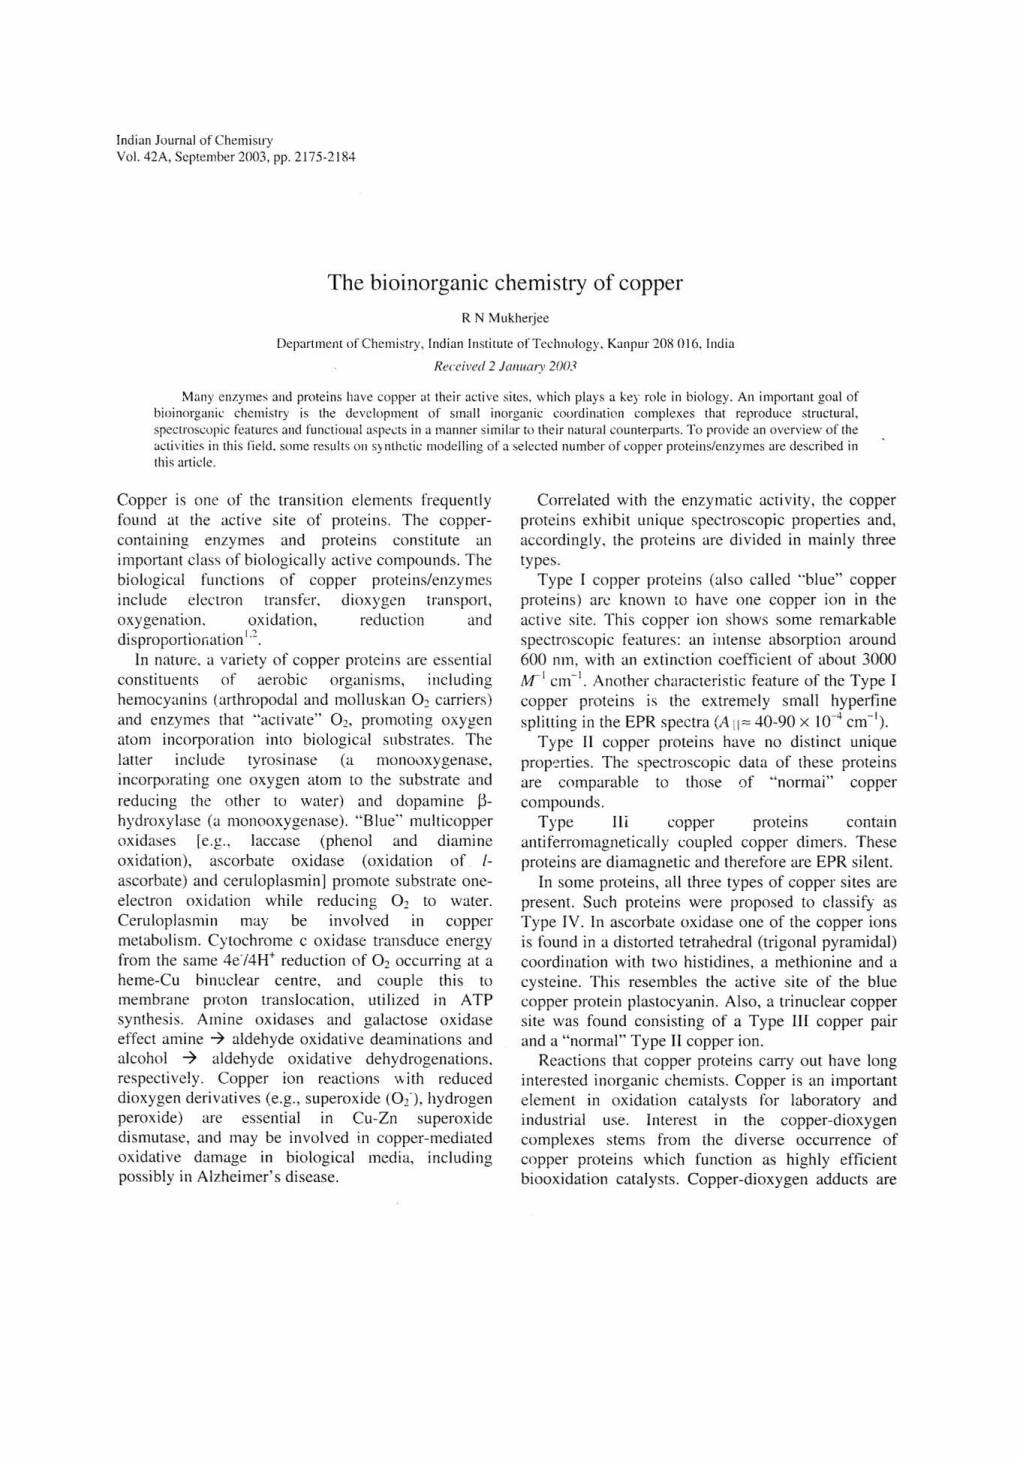 The Bioinorganic Chemistry of Copper